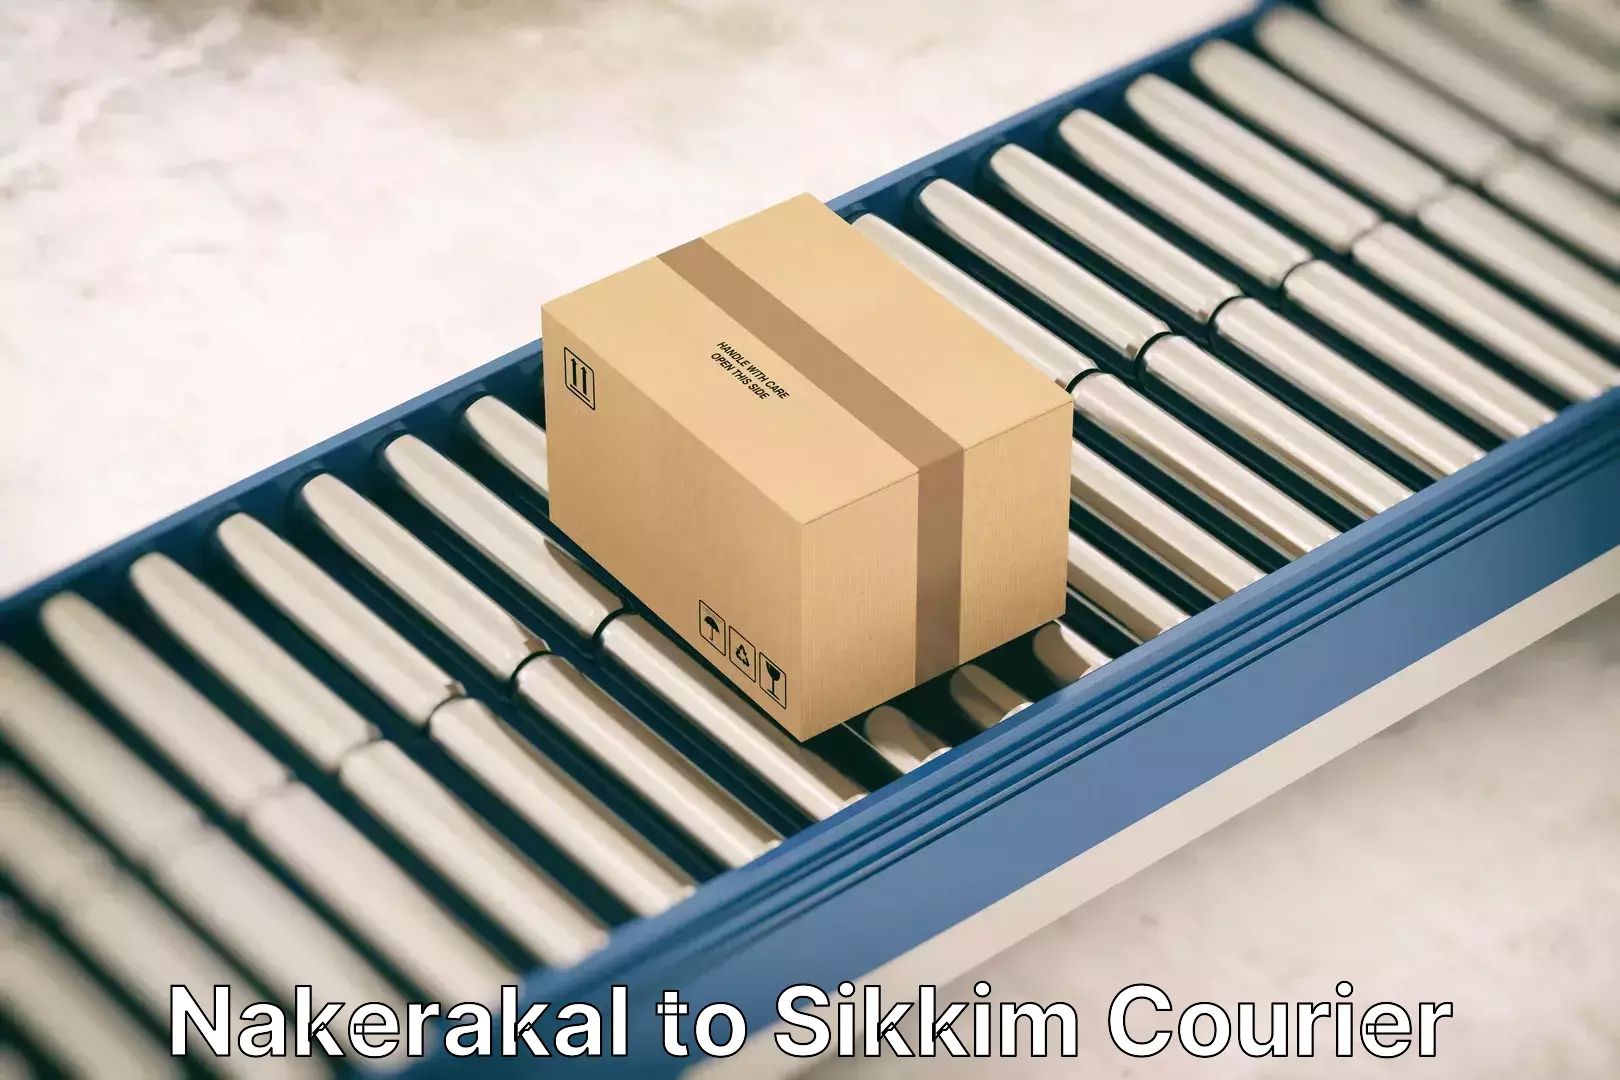 Home goods moving company Nakerakal to Sikkim